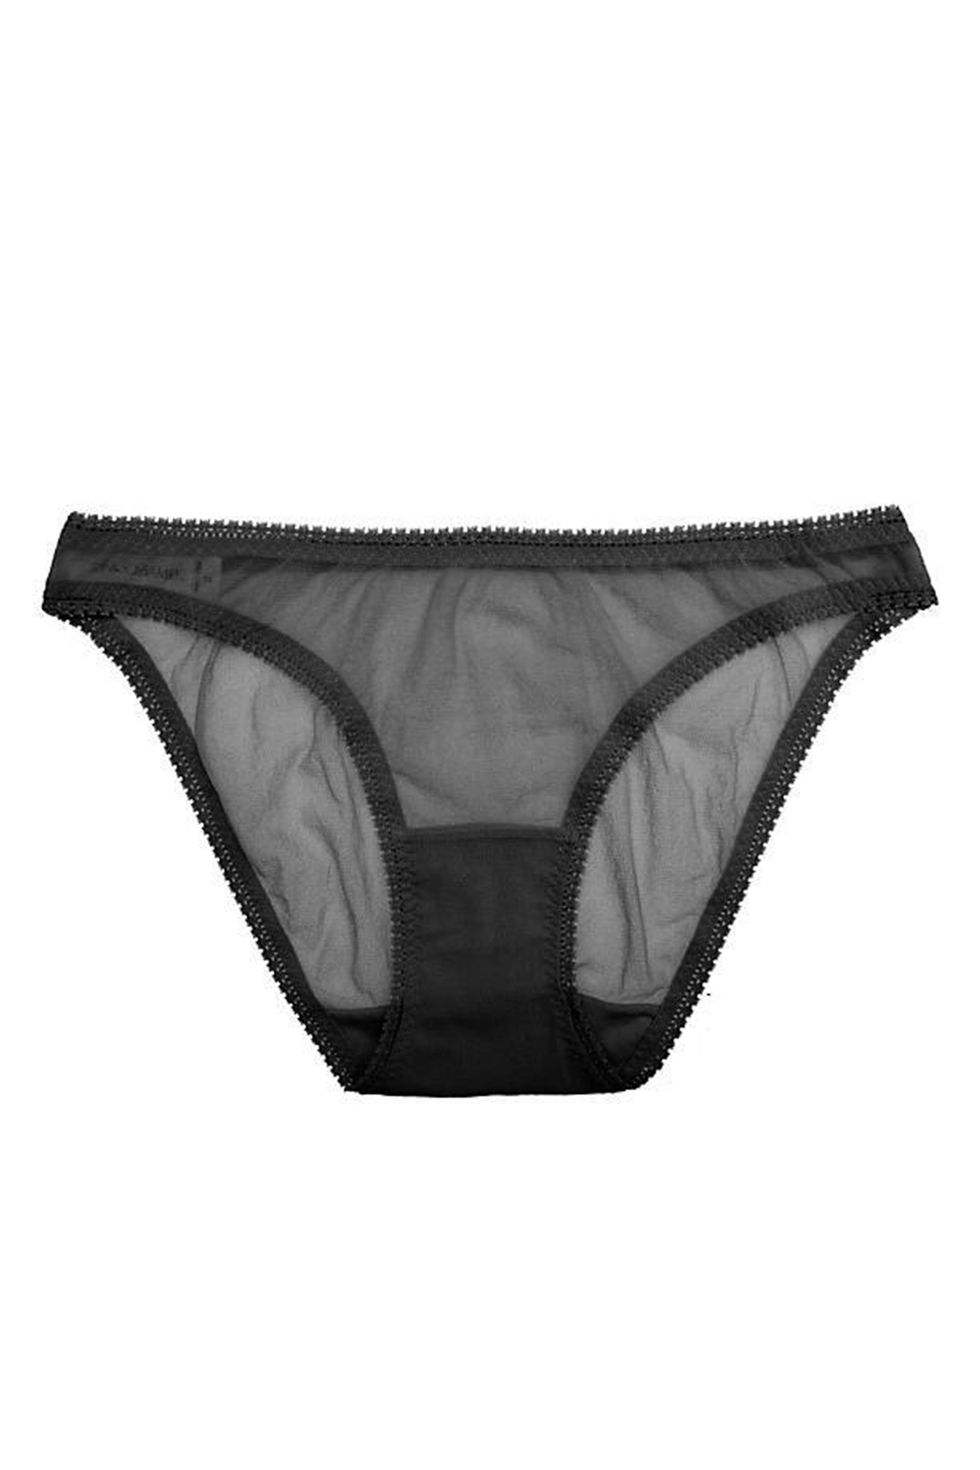 Gossamer Mesh Boyshort Underwear - Black